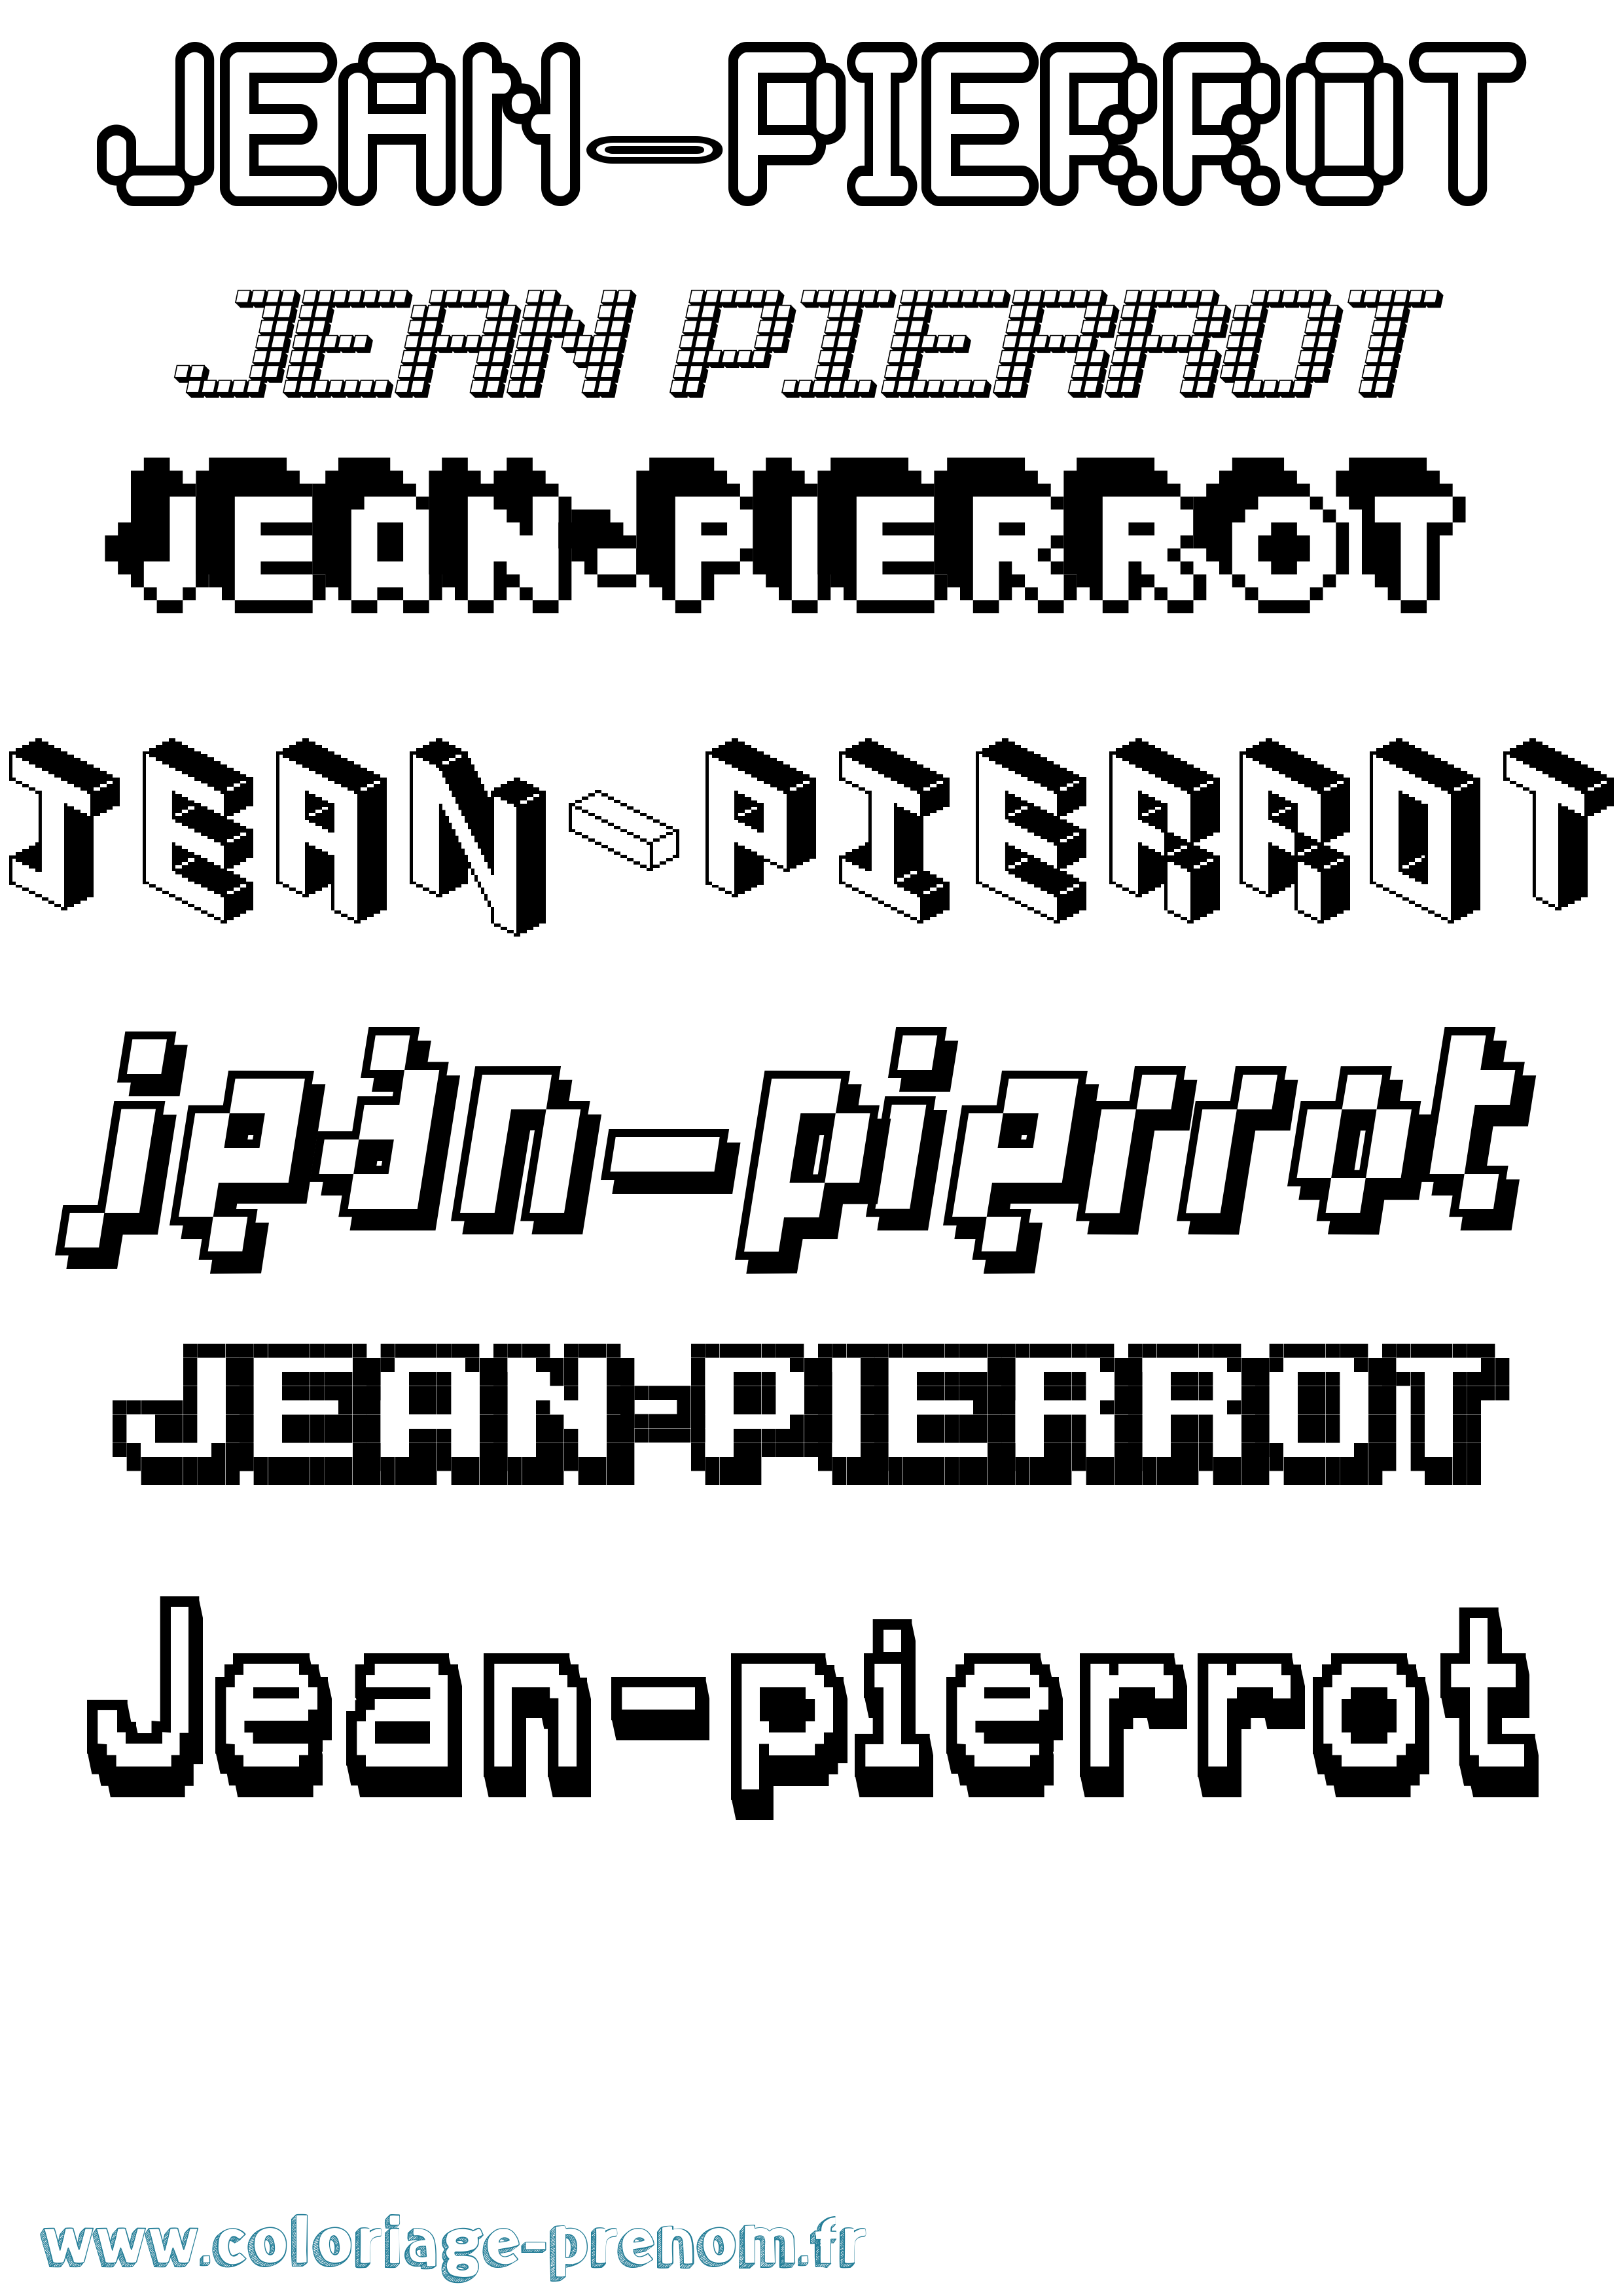 Coloriage prénom Jean-Pierrot Pixel